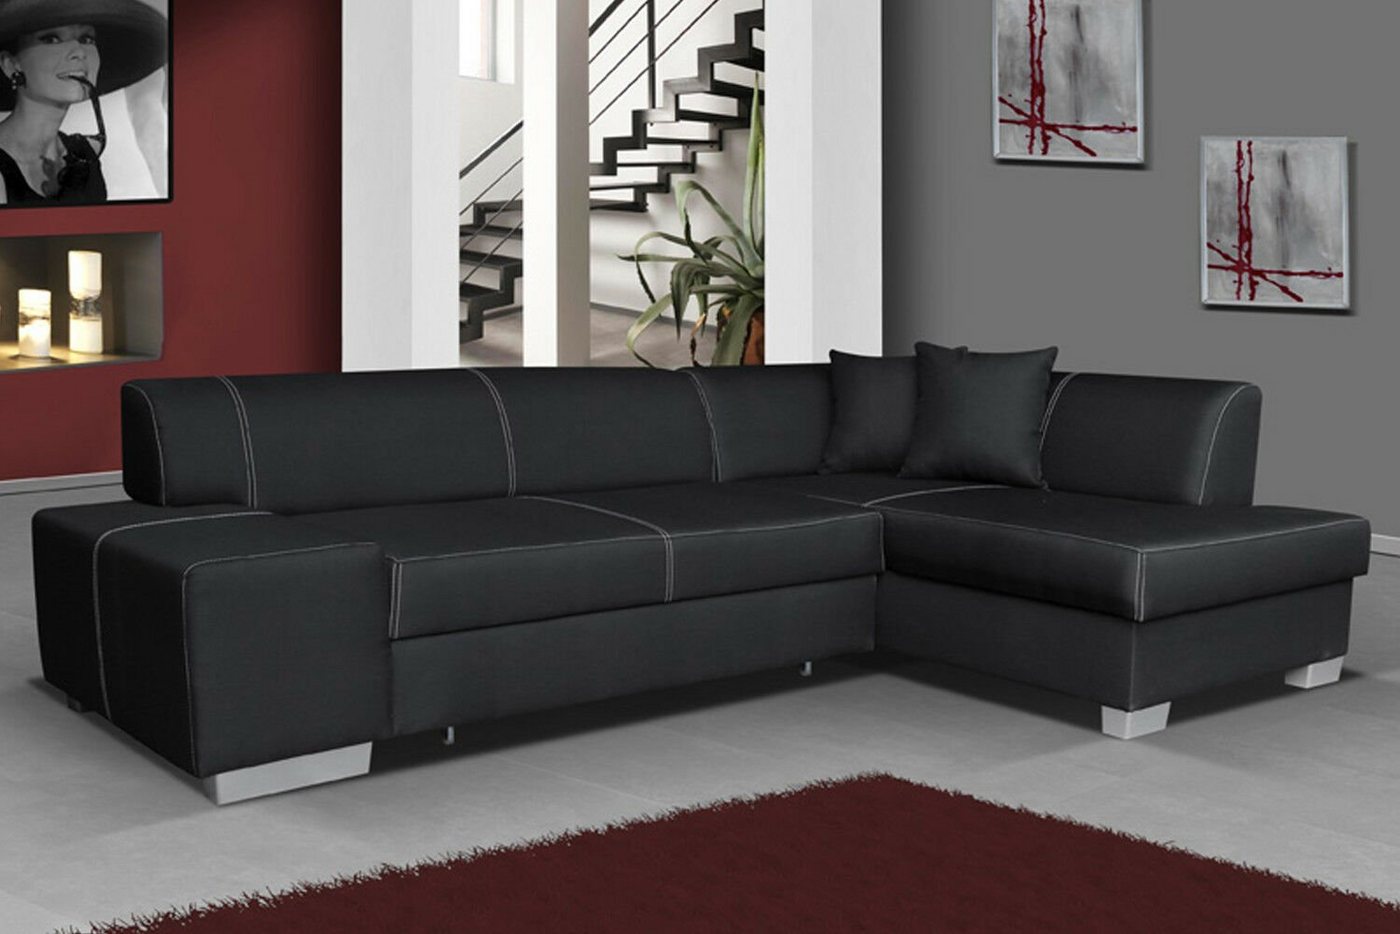 JVmoebel Ecksofa, Design Ecksofa Schlafsofa Bettfunktion Couch Leder Textil Polster von JVmoebel